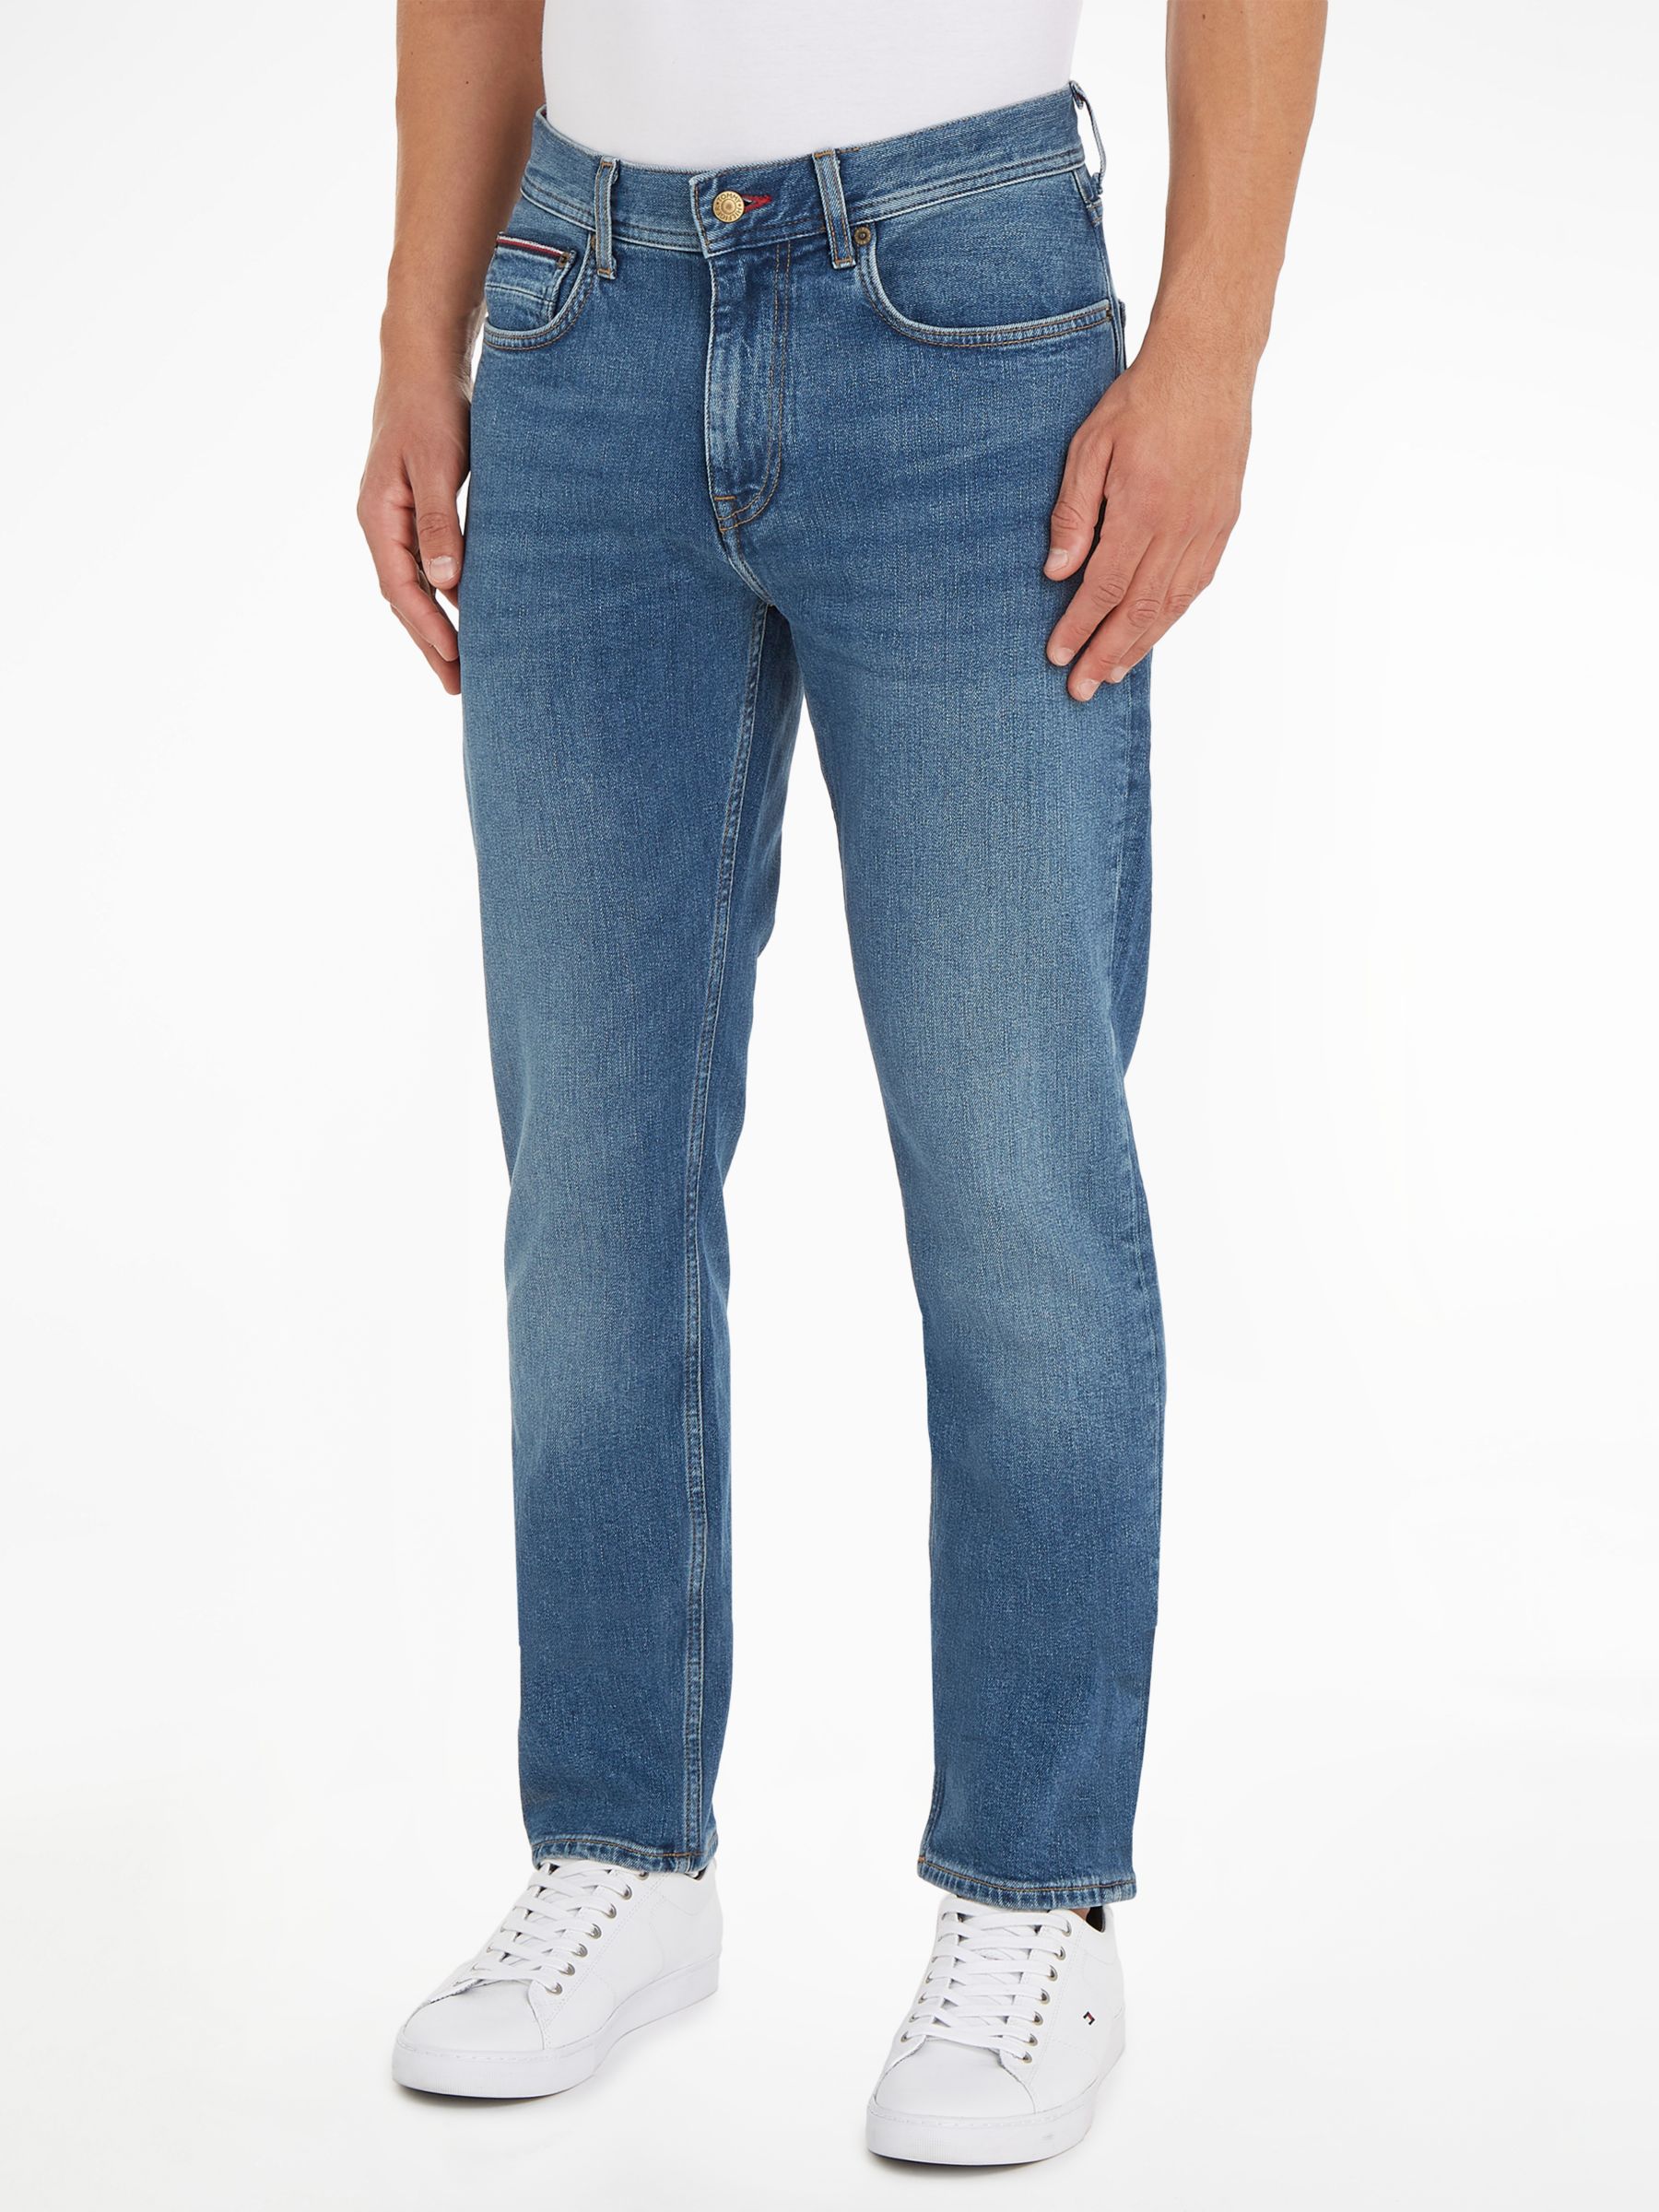 Buy Tommy Hilfiger Denton Straight Jeans, Boston Blue Online at johnlewis.com